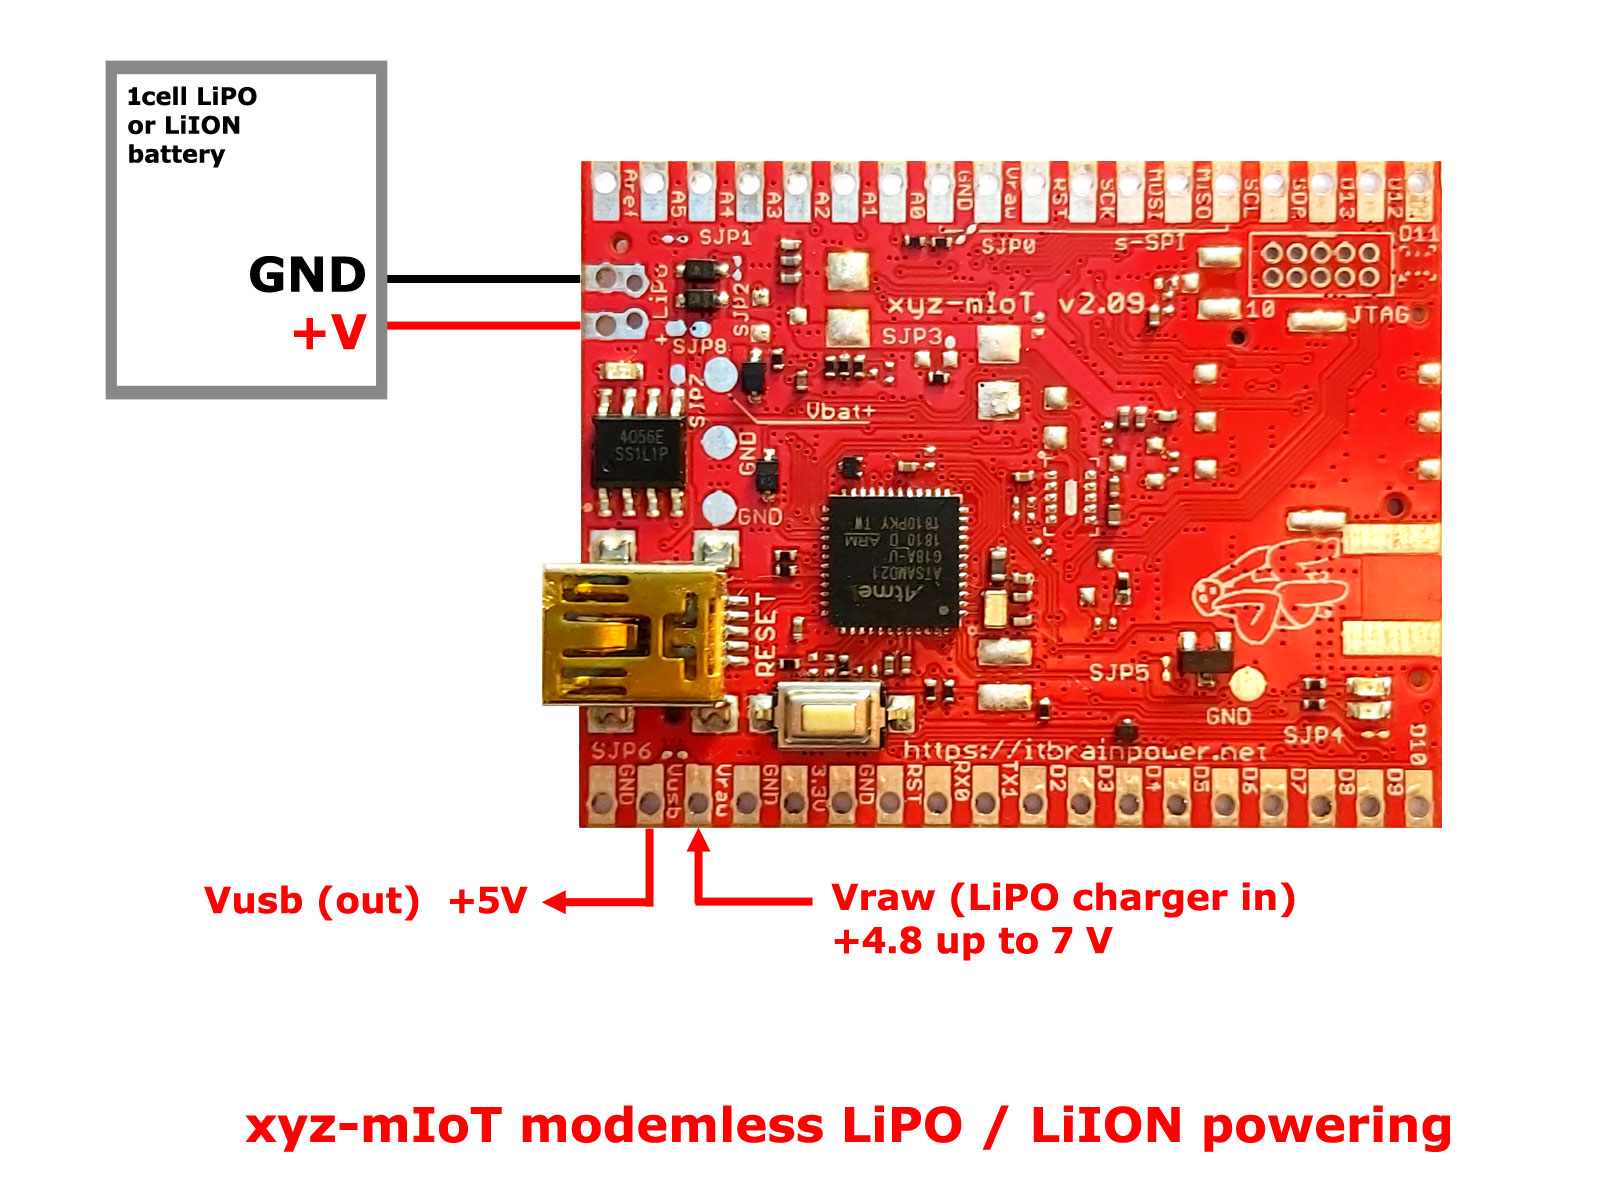 xyz-mIoT modemless version LiPO or LiION powering